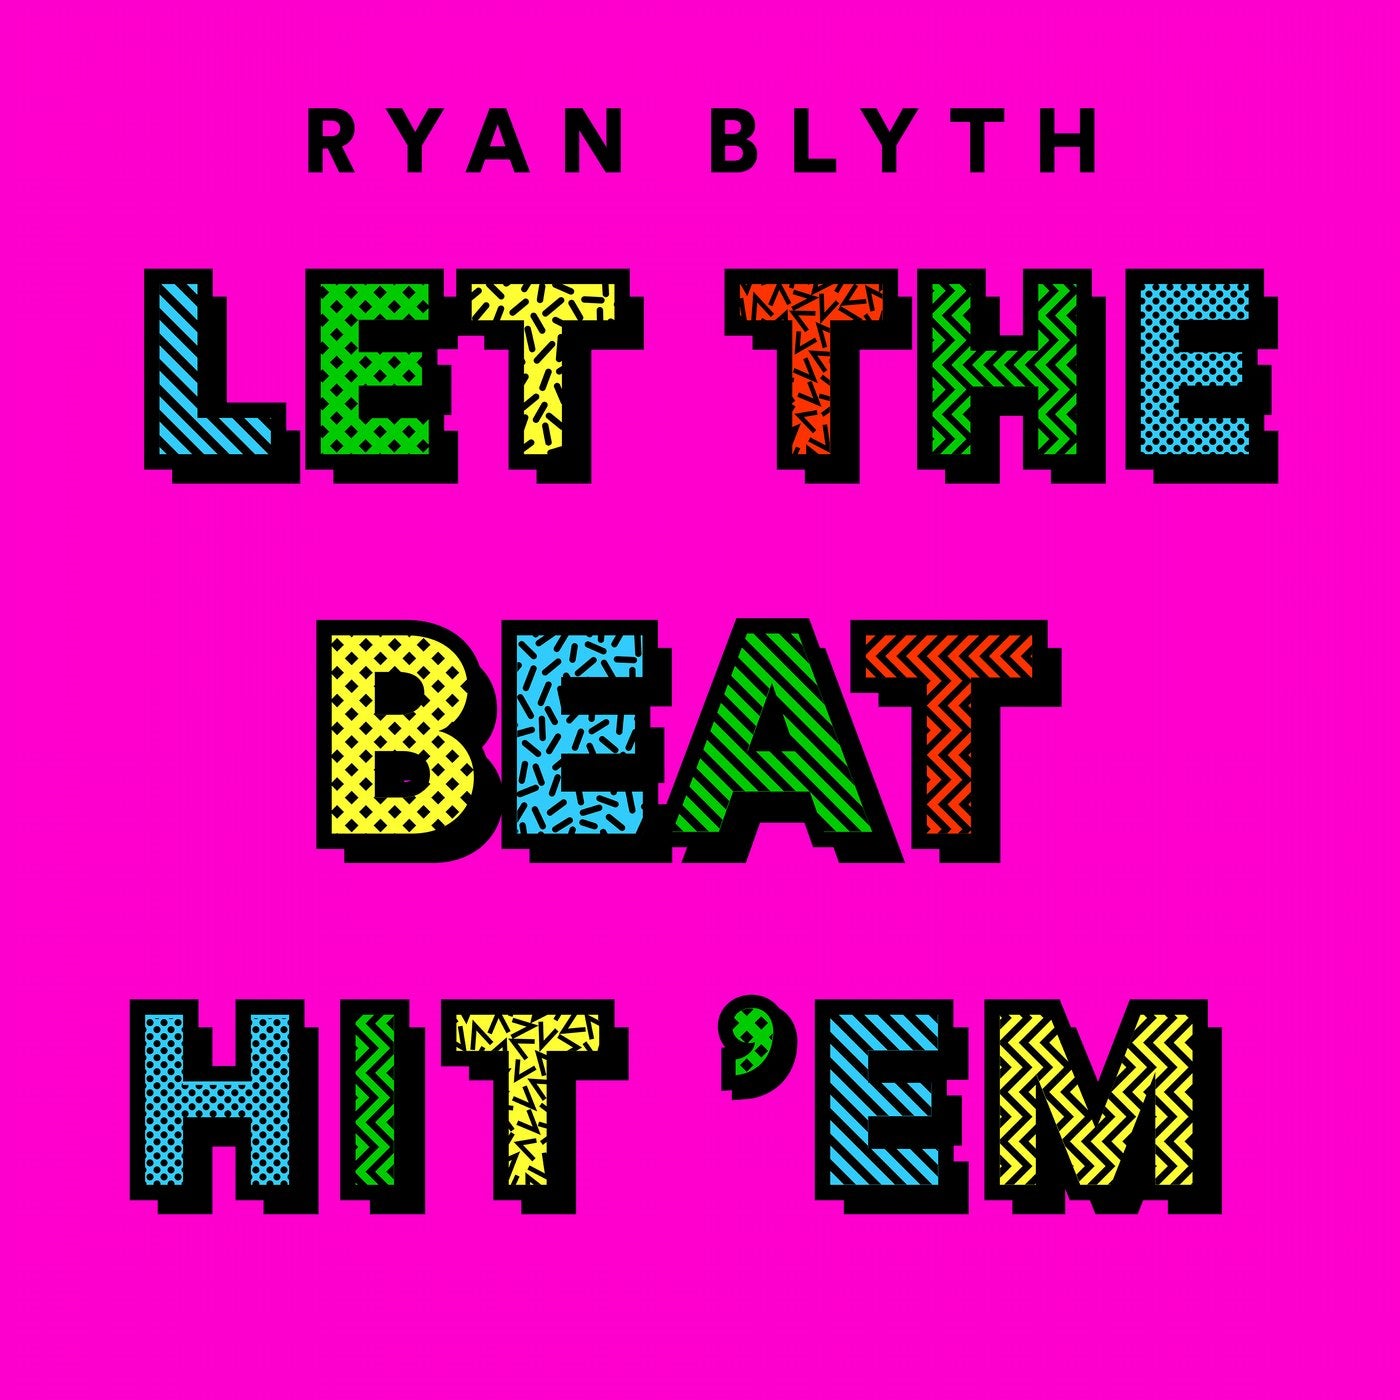 Hit beats